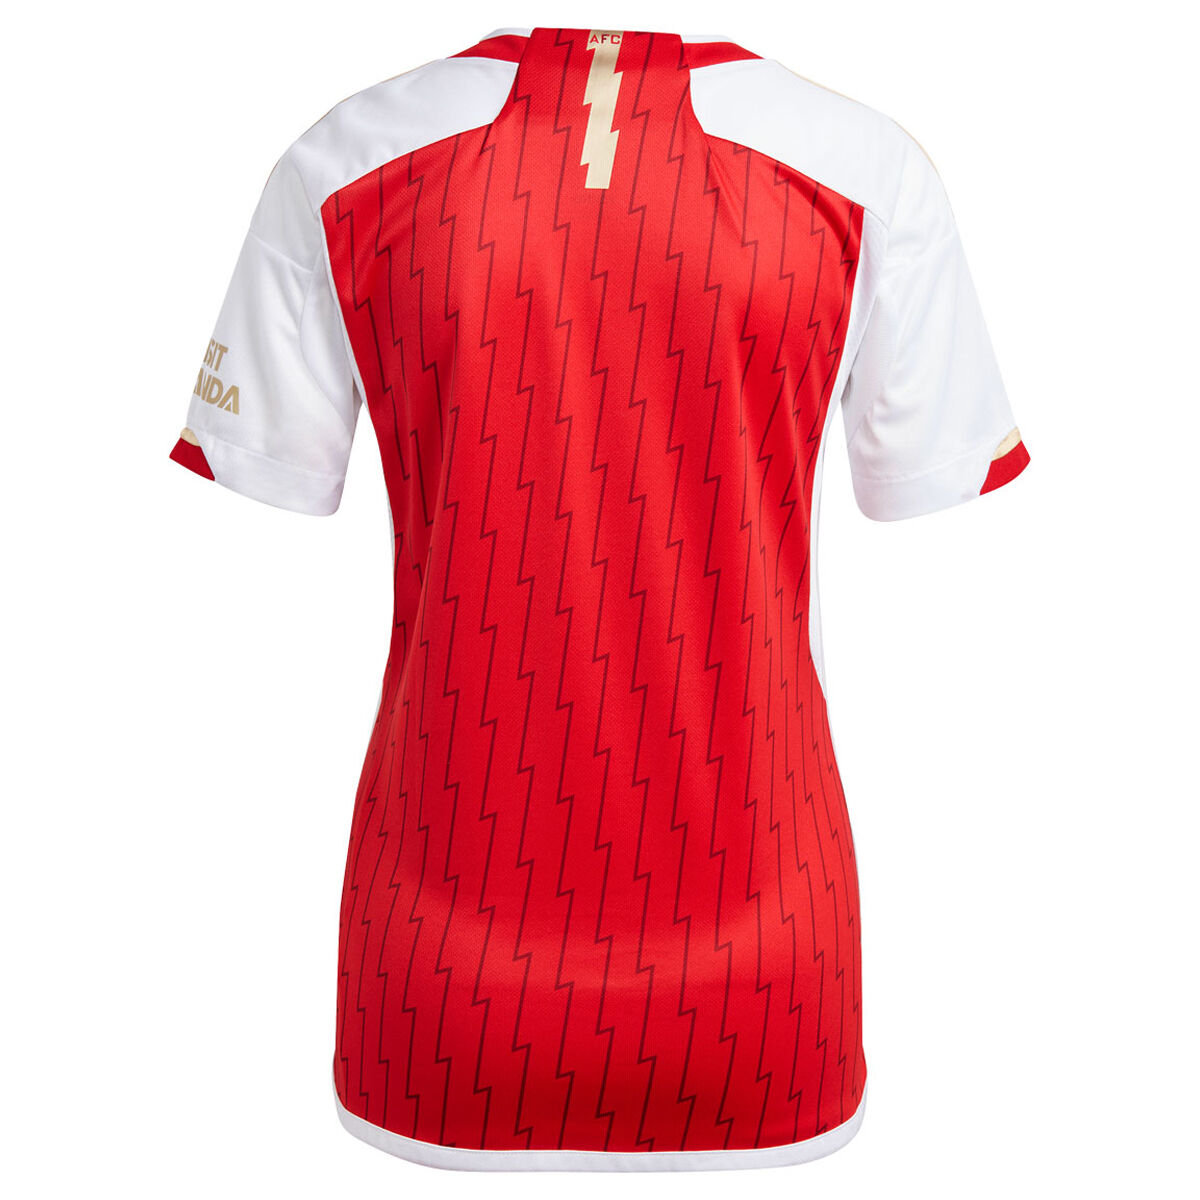 EPL Jerseys & Teamwear, English Premier League Merch